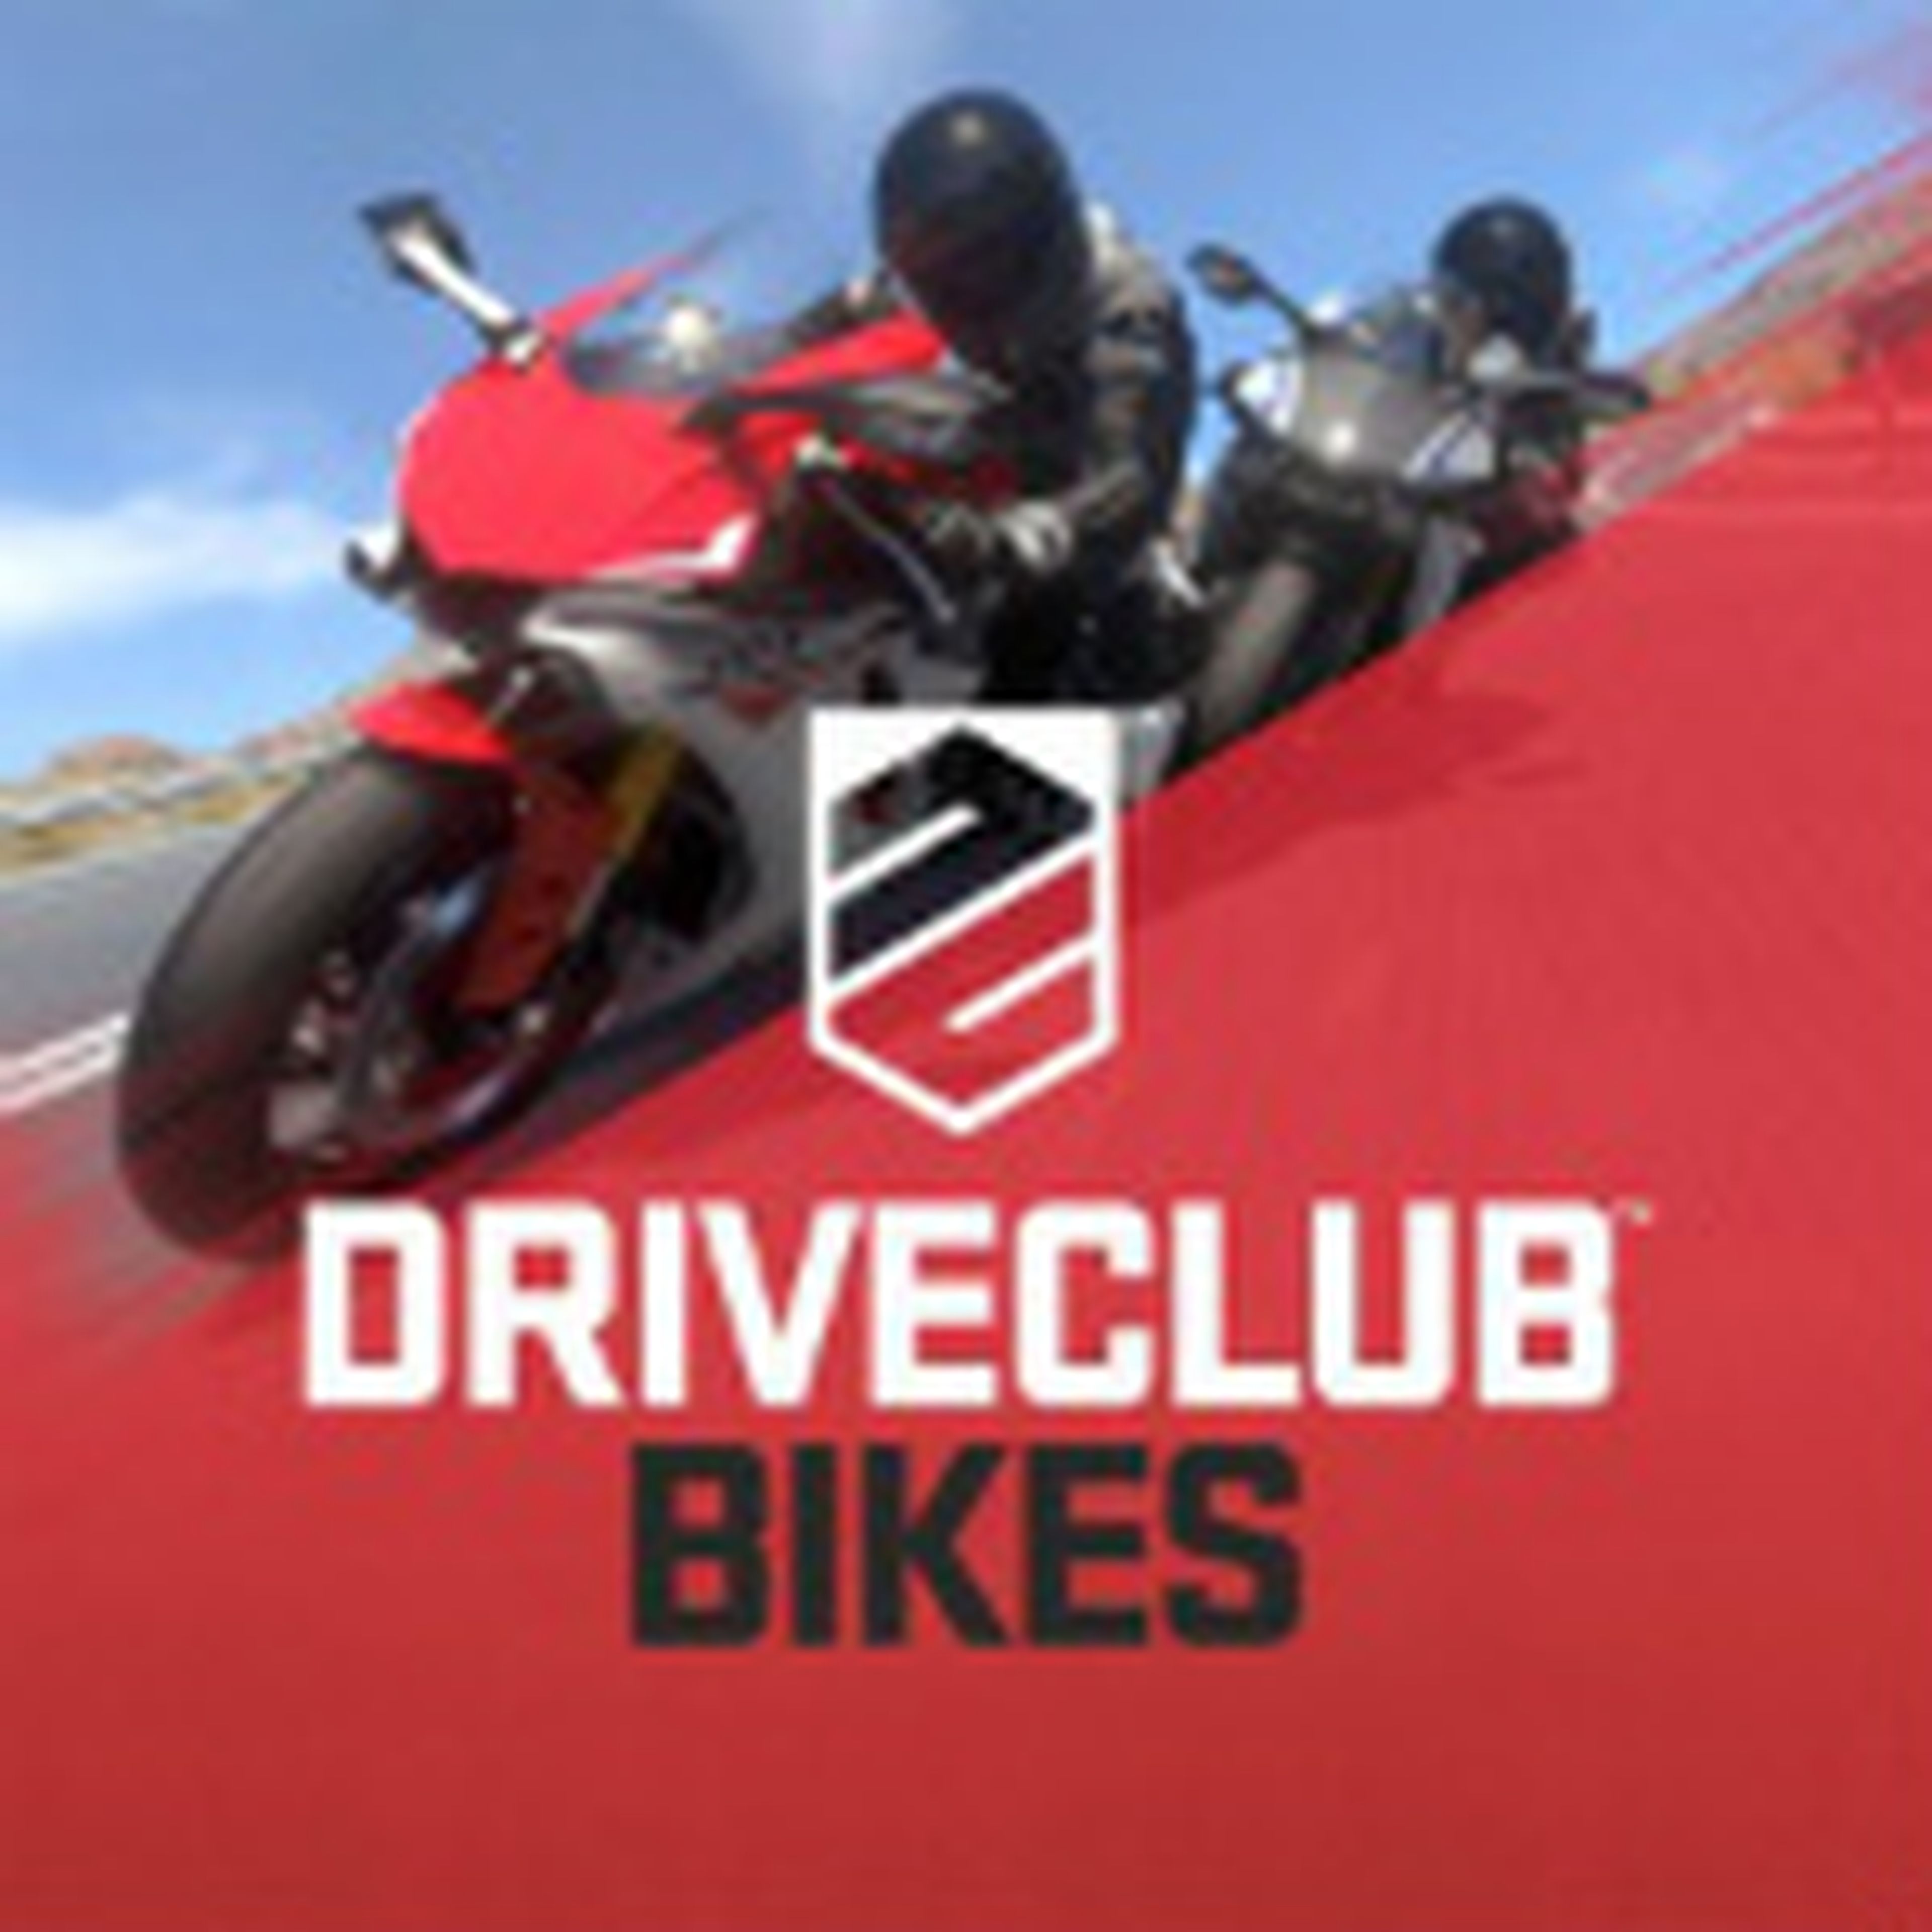 DriveClub Bikes para PS4